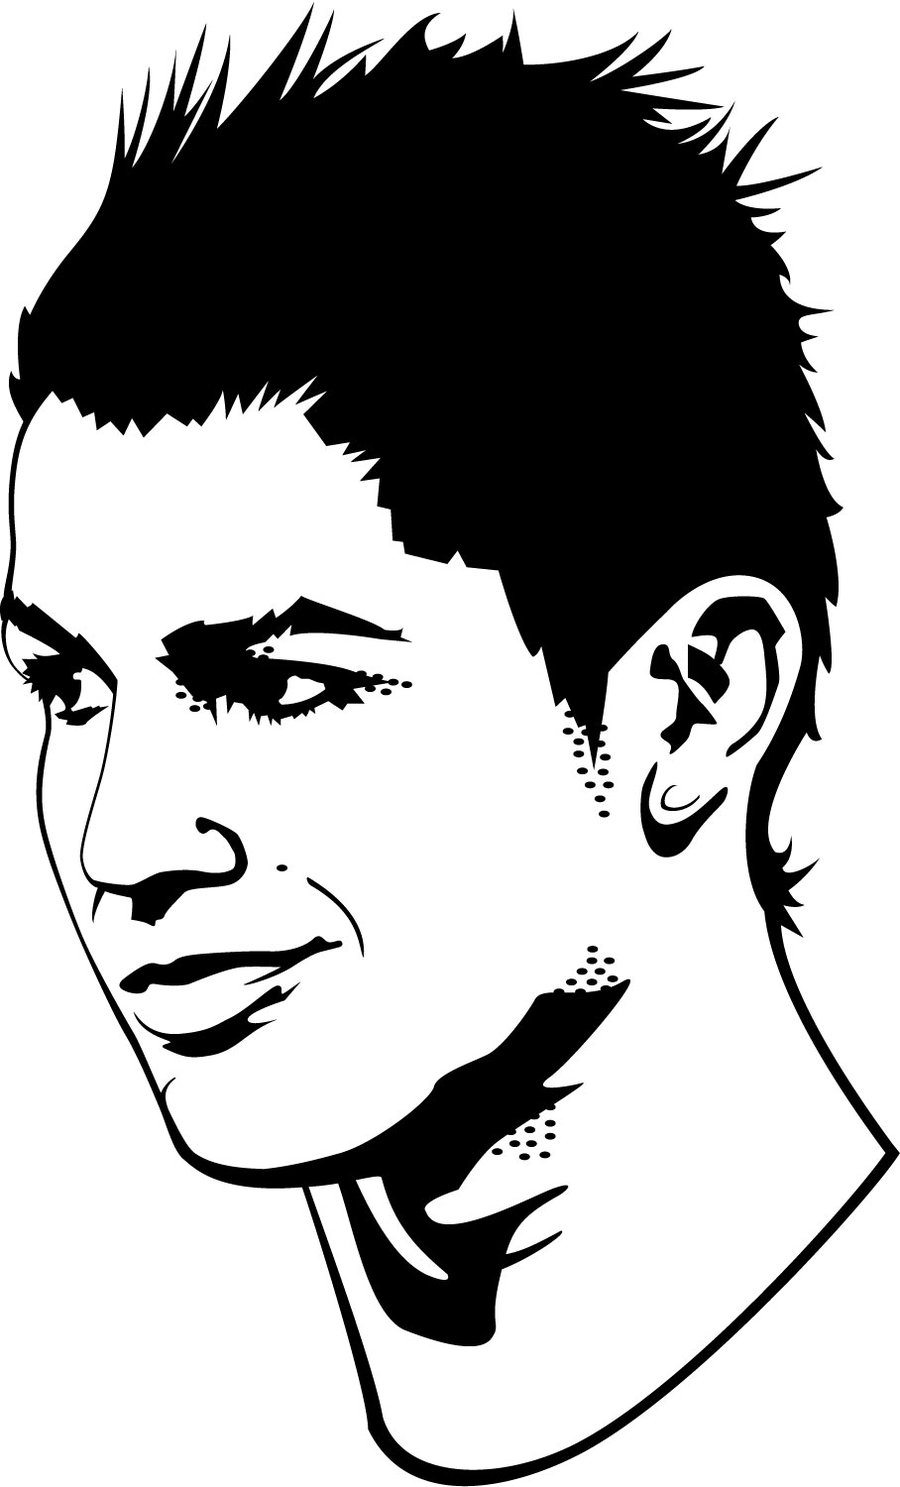 Cristiano Ronaldo Portrait by Vectorportal on deviantART